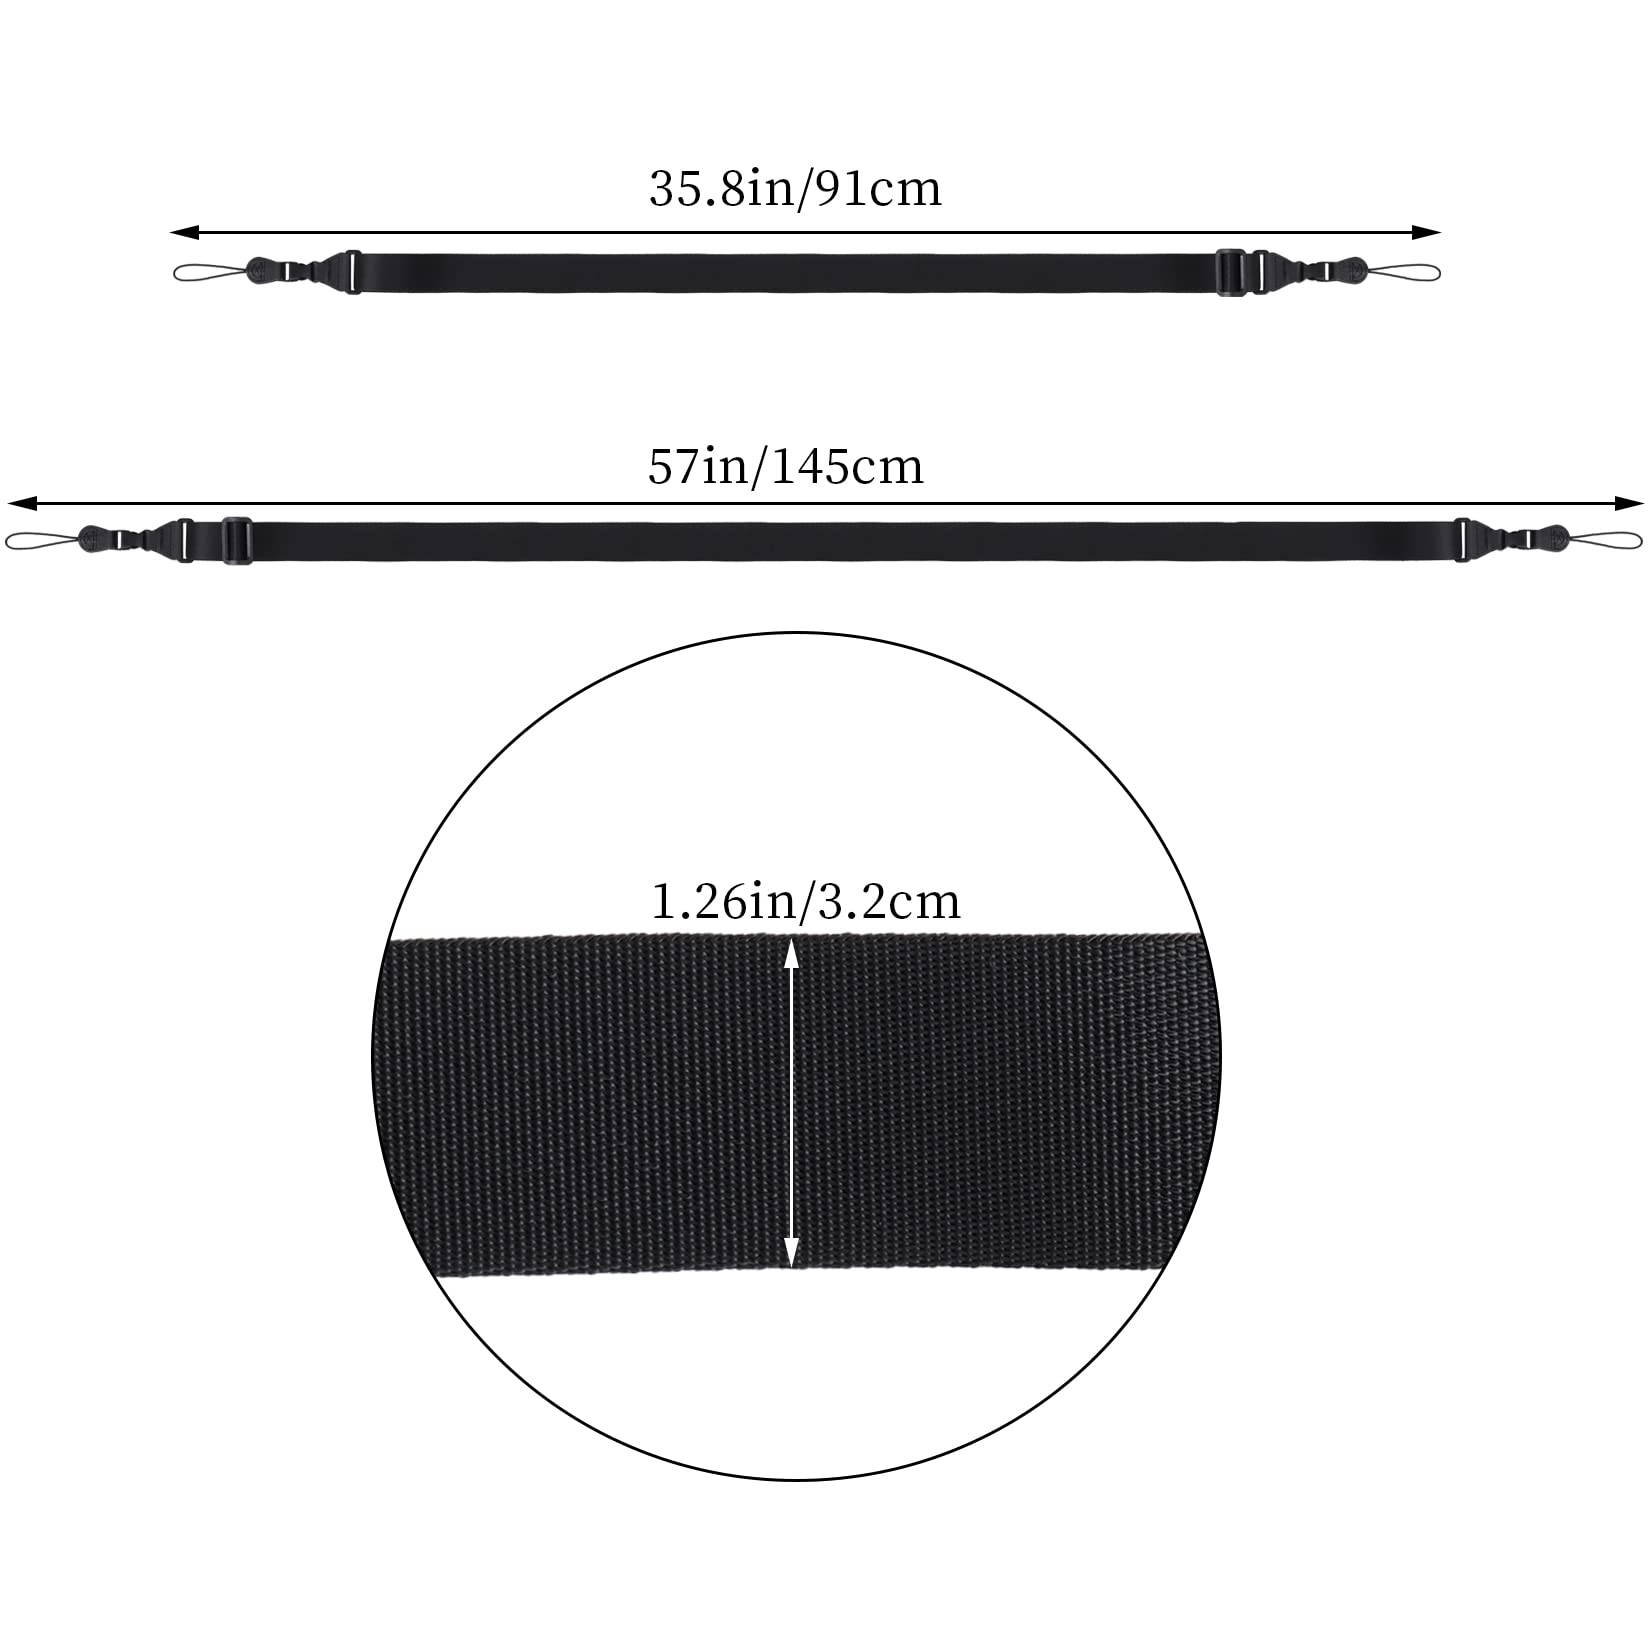 Hmxpls 3 Pcs Adjustable Shoulder Strap, Tablet Strap, iPad Case Strap, Quick Release Shoulder Strap for Camera Binocular Cross-body Laptop Luggage Bag